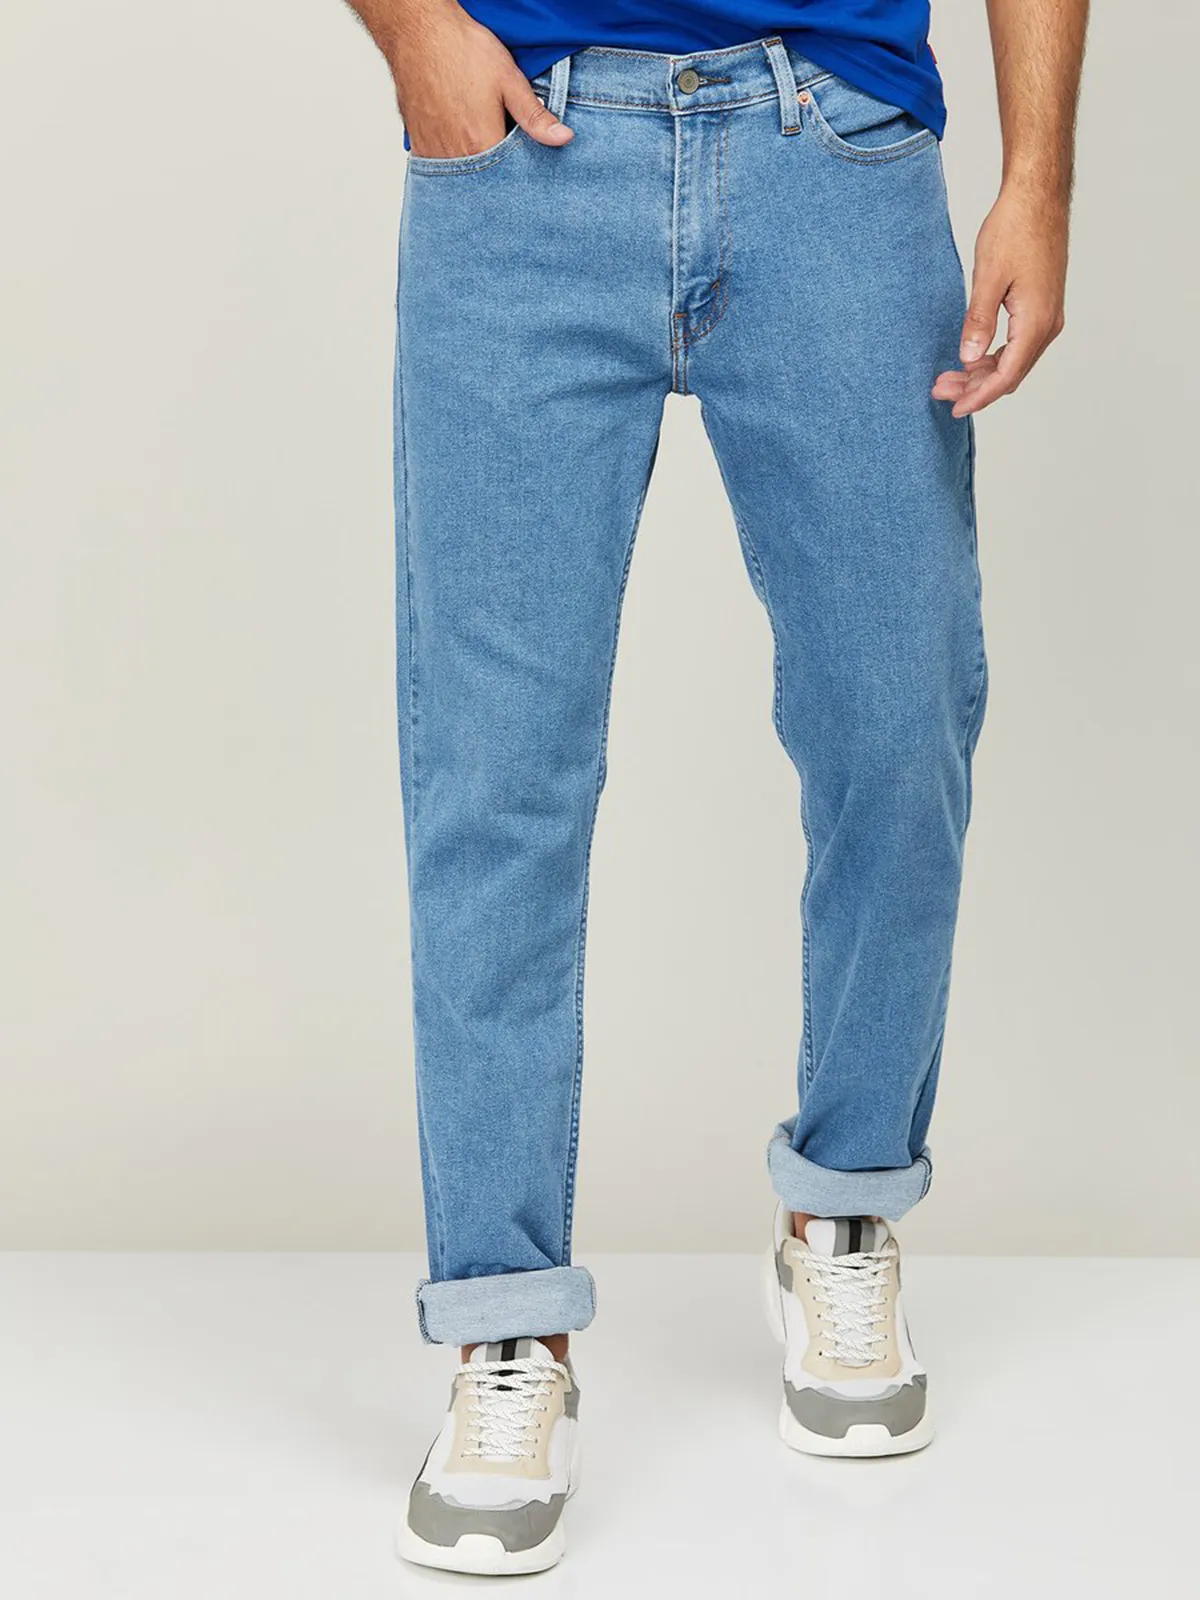 Levis light blue 511 slim fit solid jeans